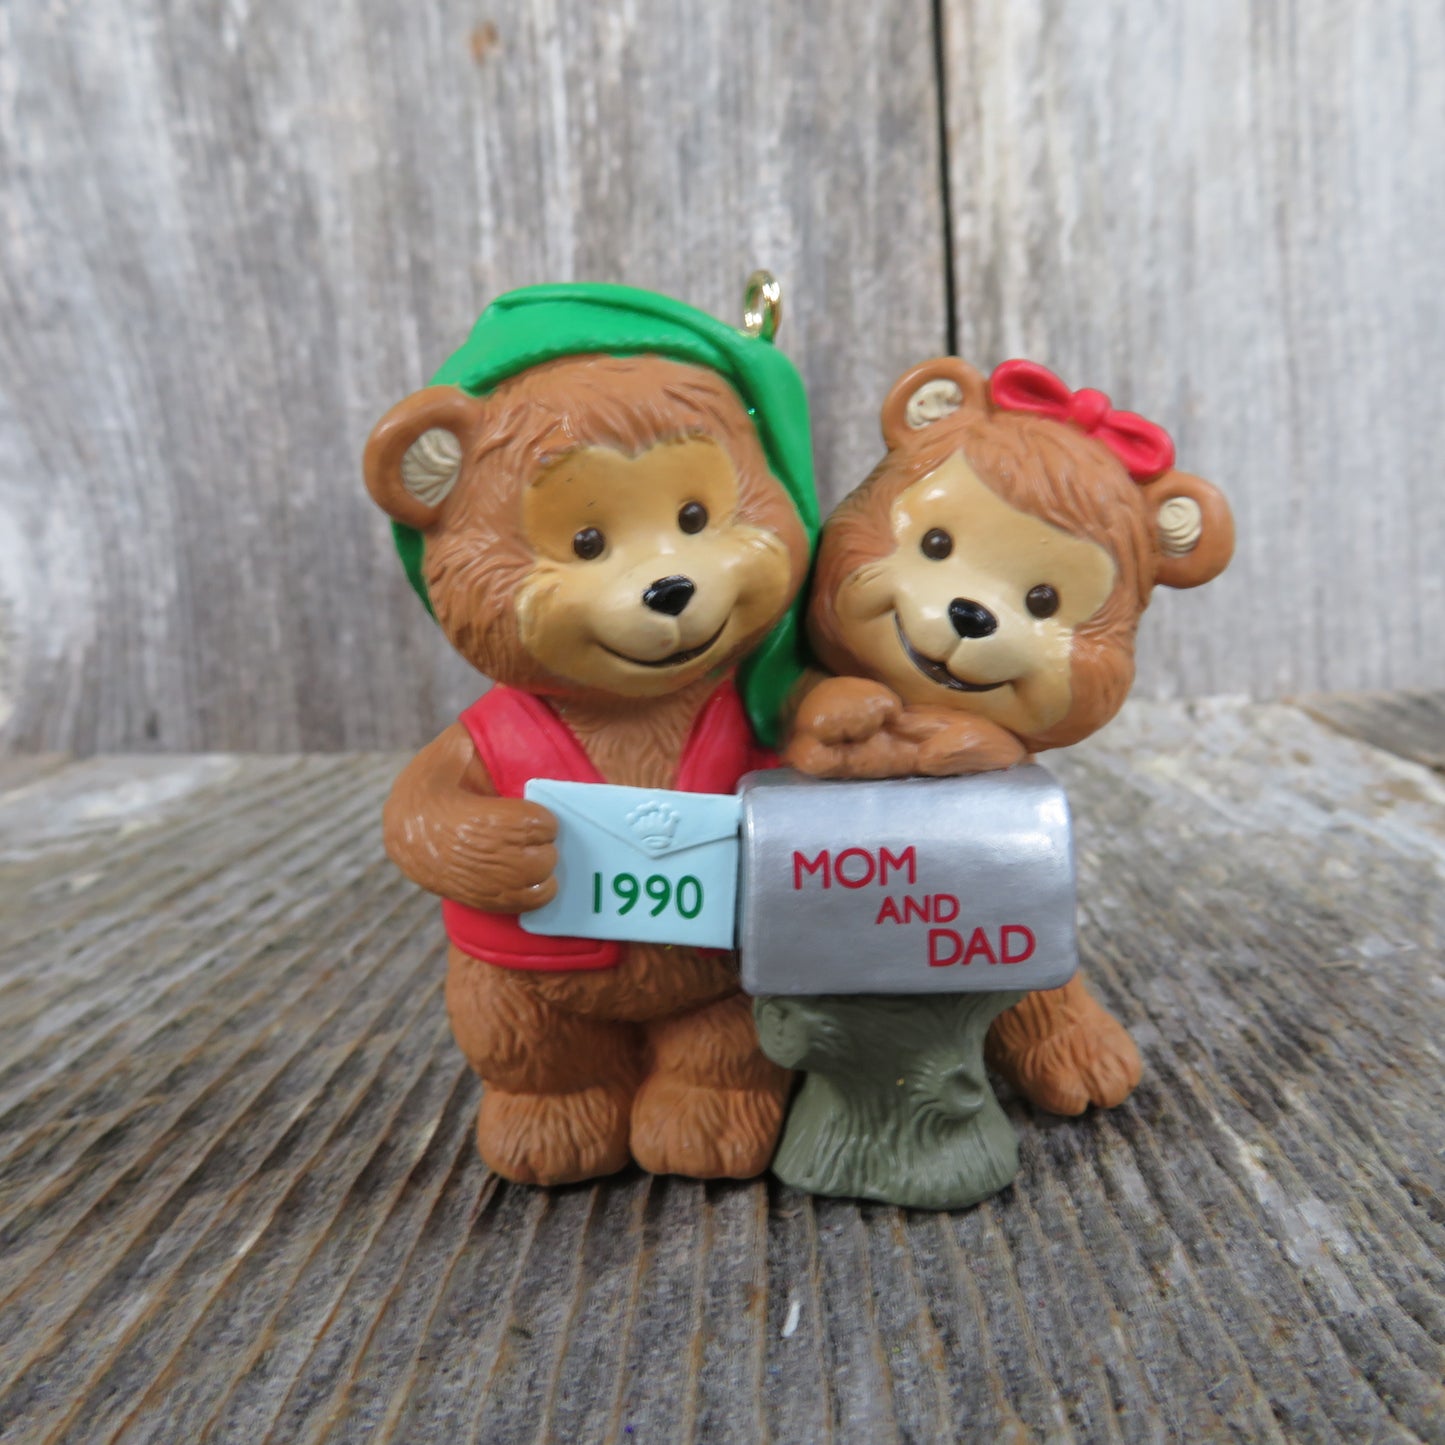 Vintage Teddy Bear Mom and Dad Ornament Christmas Hallmark Mailbox 1990 Dated - At Grandma's Table